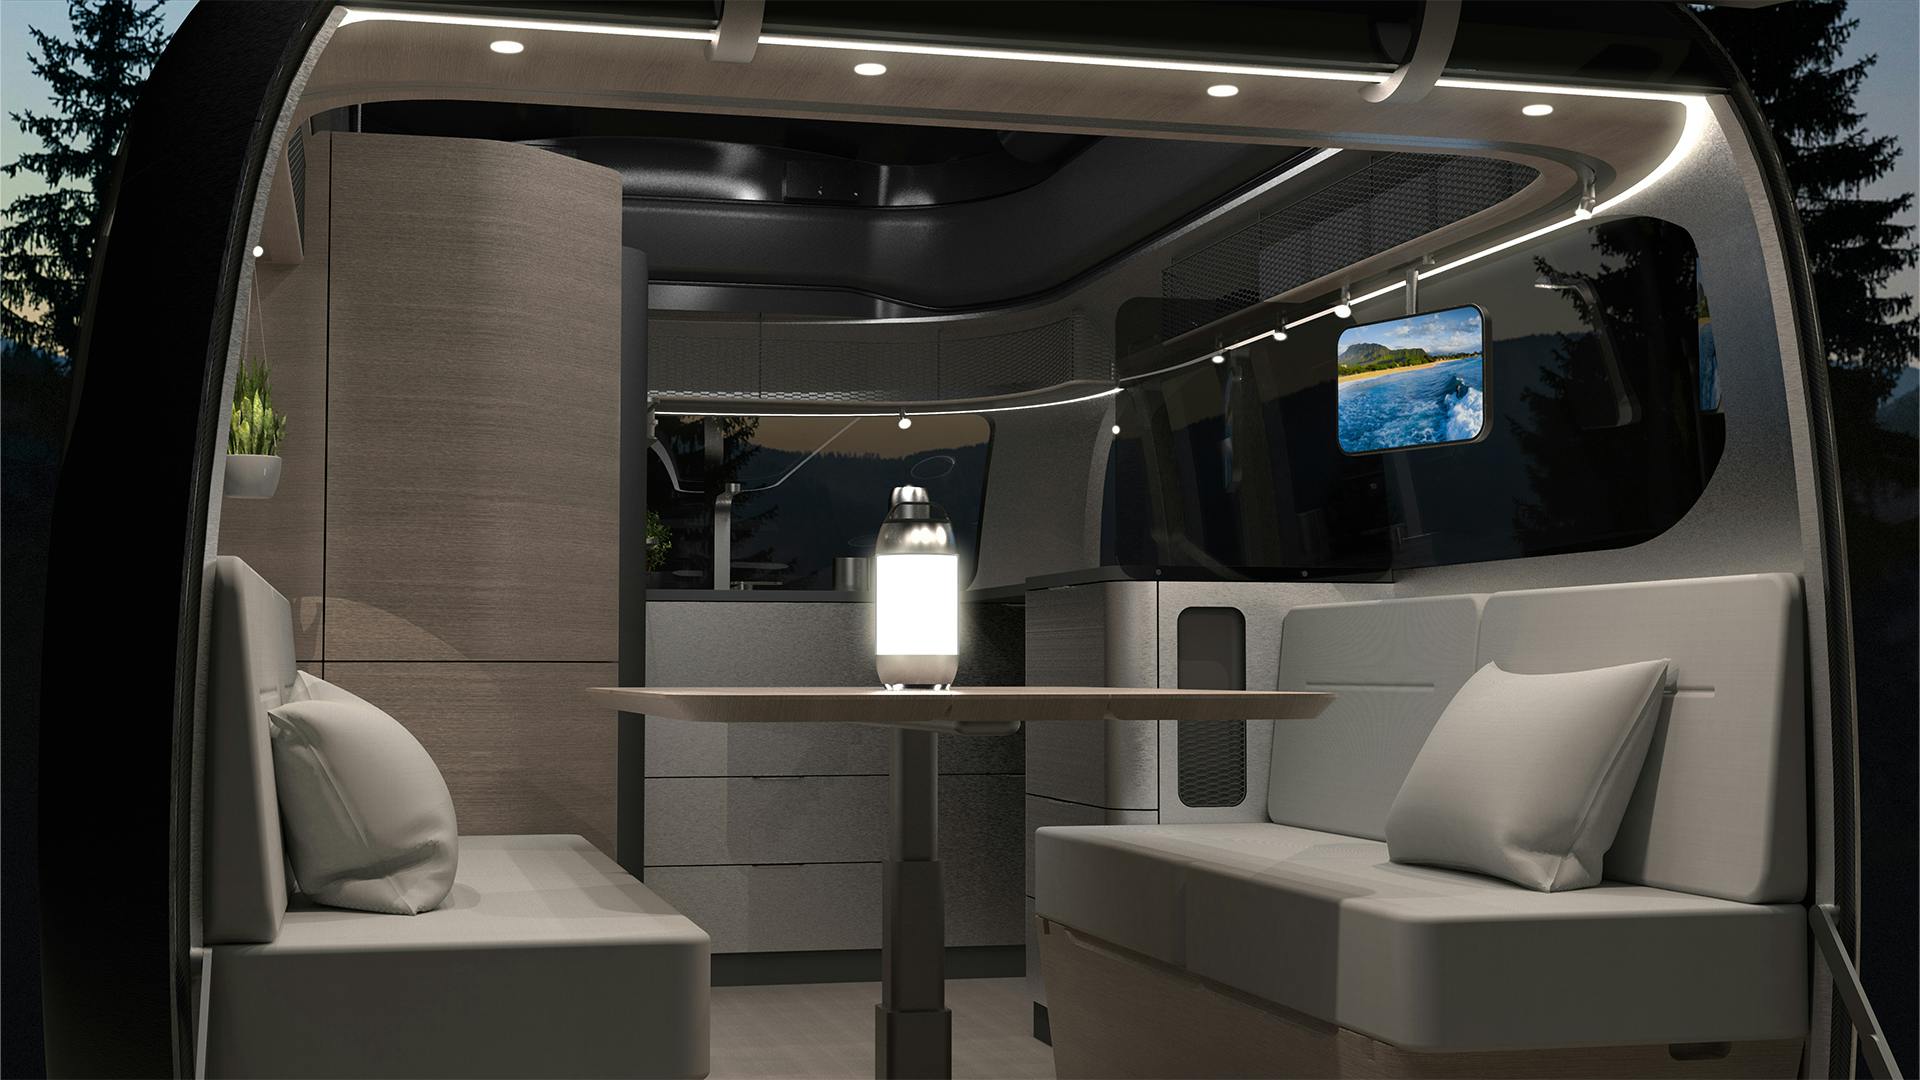 Airstream Porsche camper trailer interior modular lounge seats and table